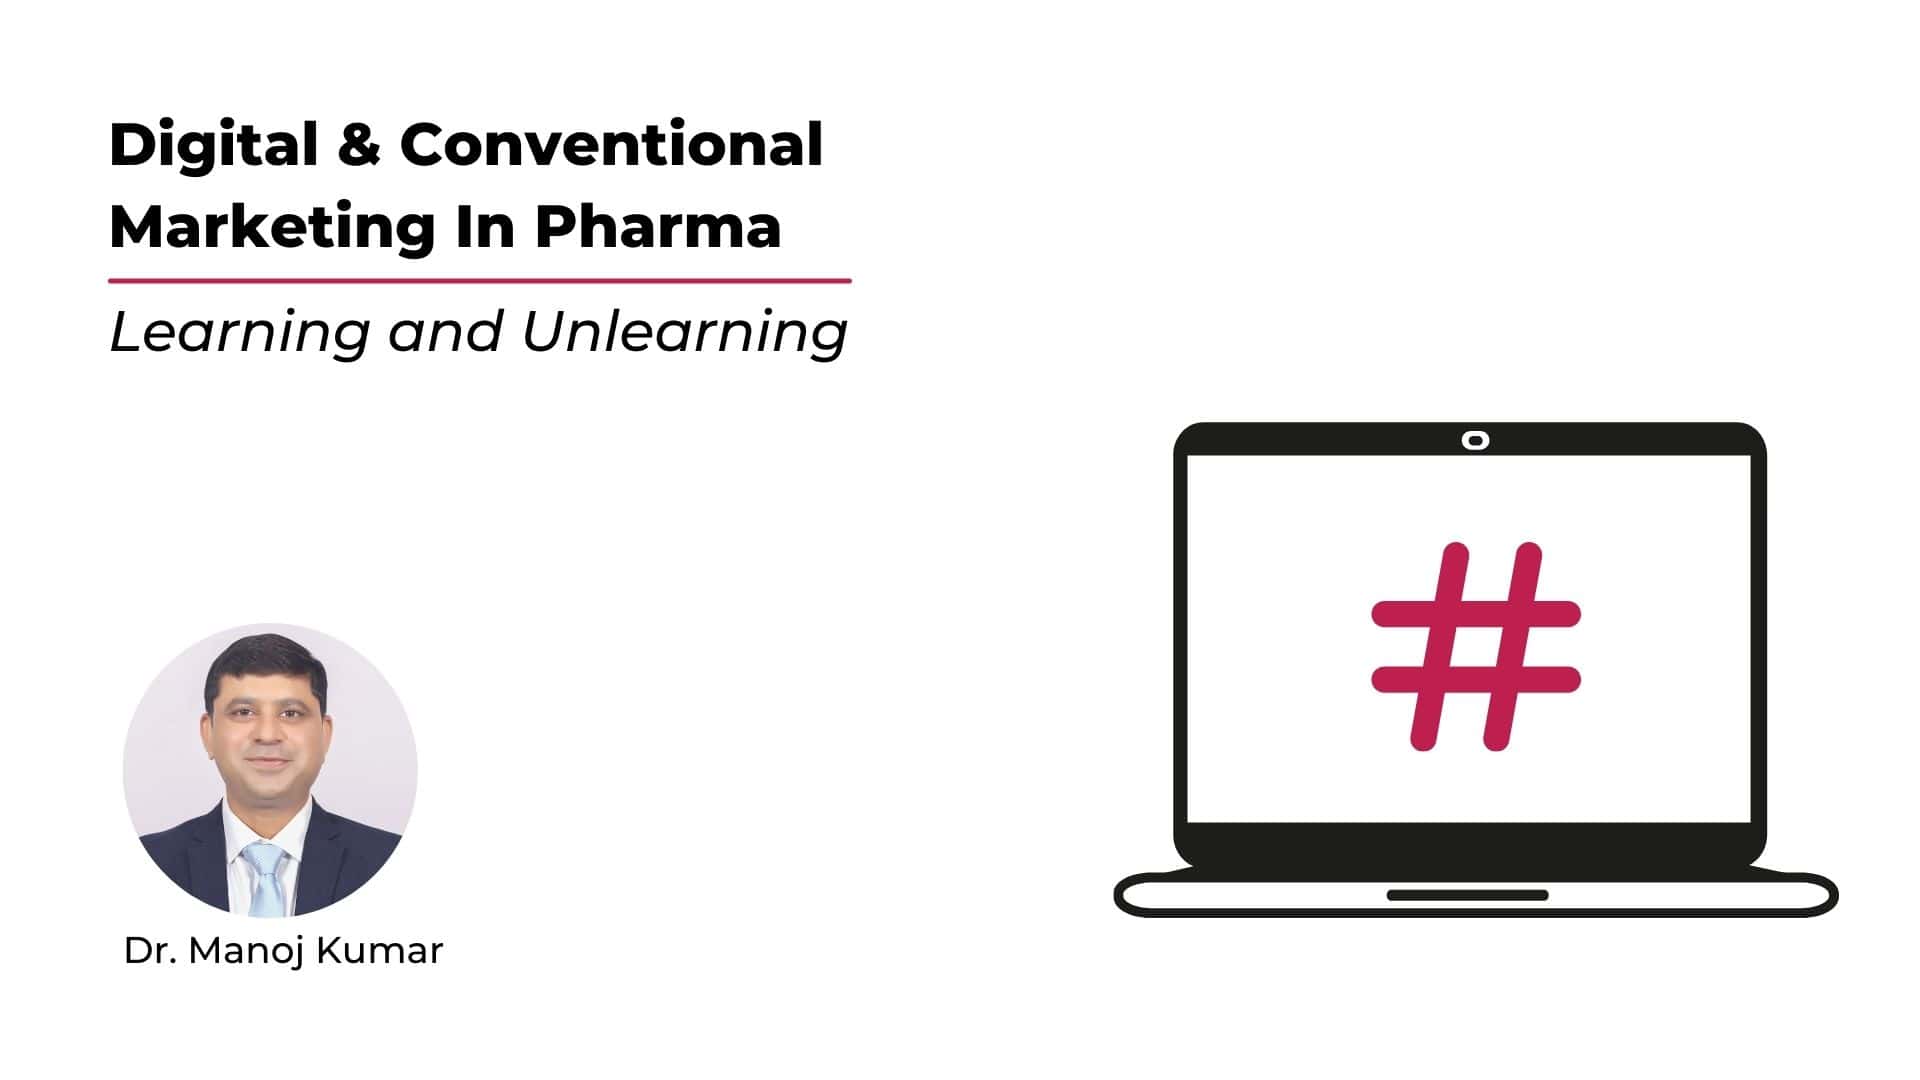 Digital & Conventional Marketing In Pharma